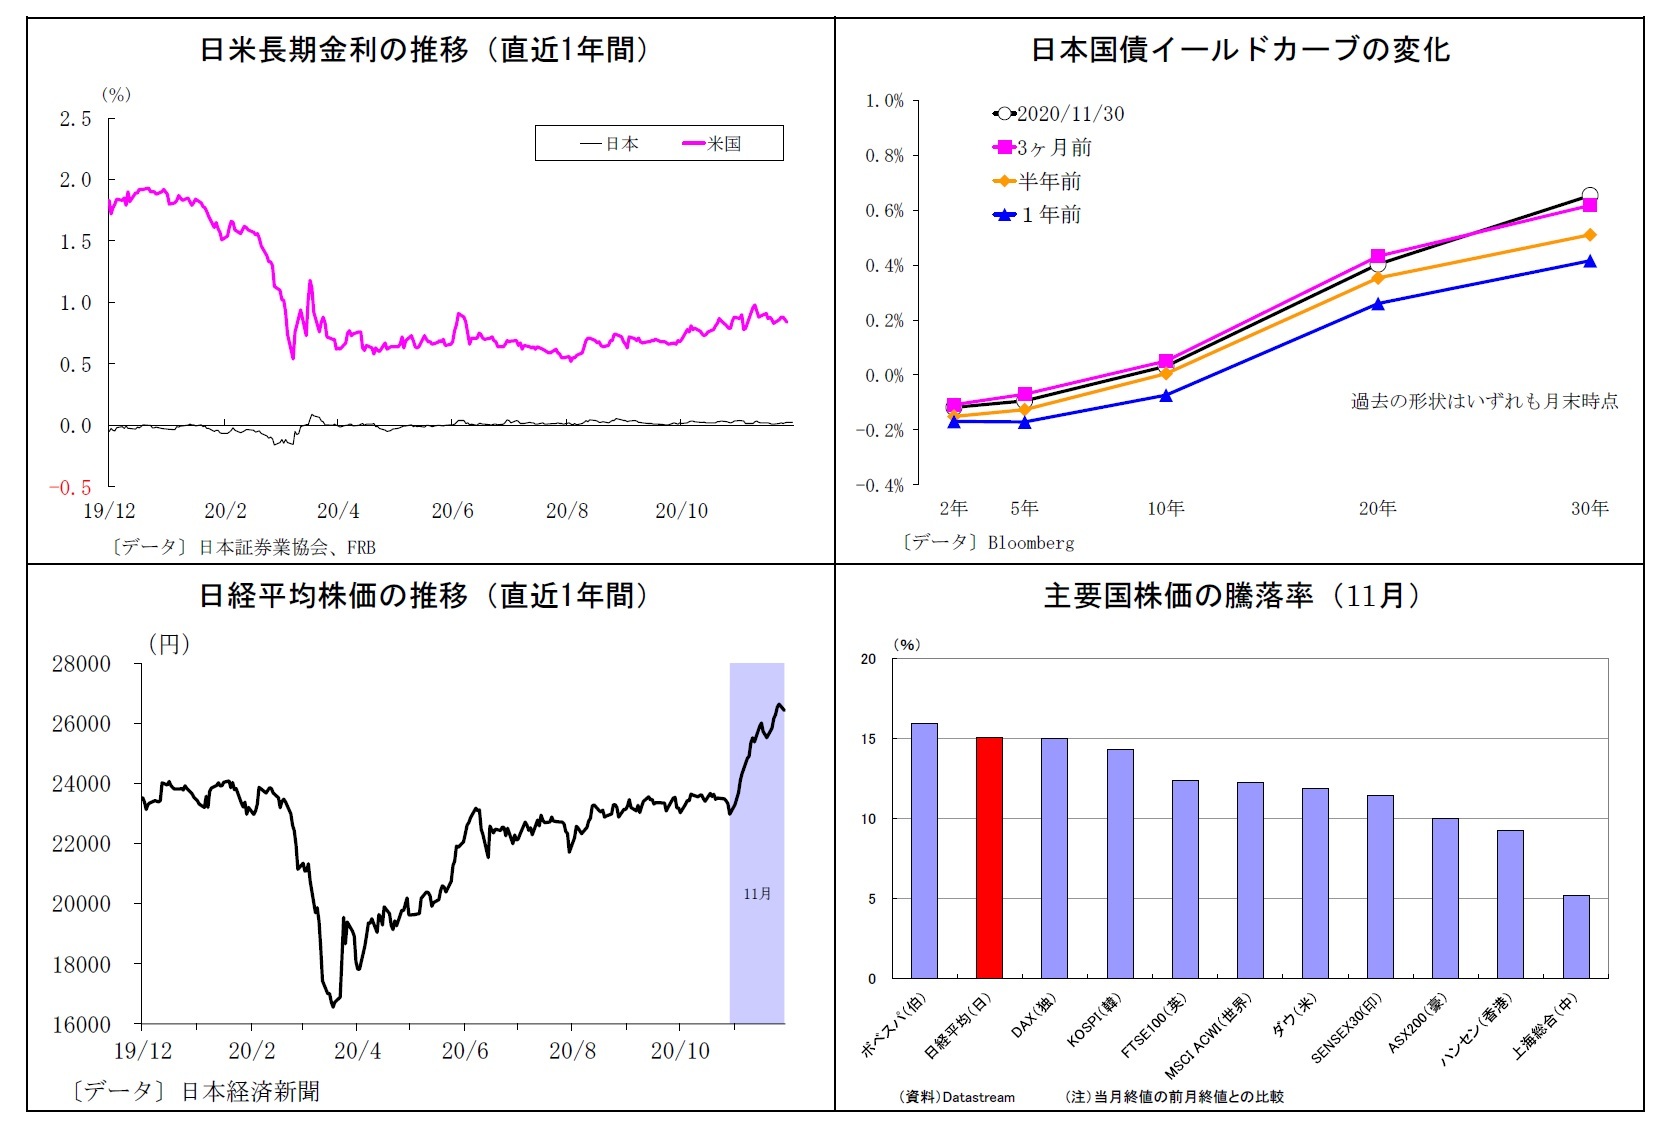 日米長期金利の推移（直近1年間）/日本国債イールドカーブの変化/日経平均株価の推移（直近1年間）/主要国株価の騰落率（11月）